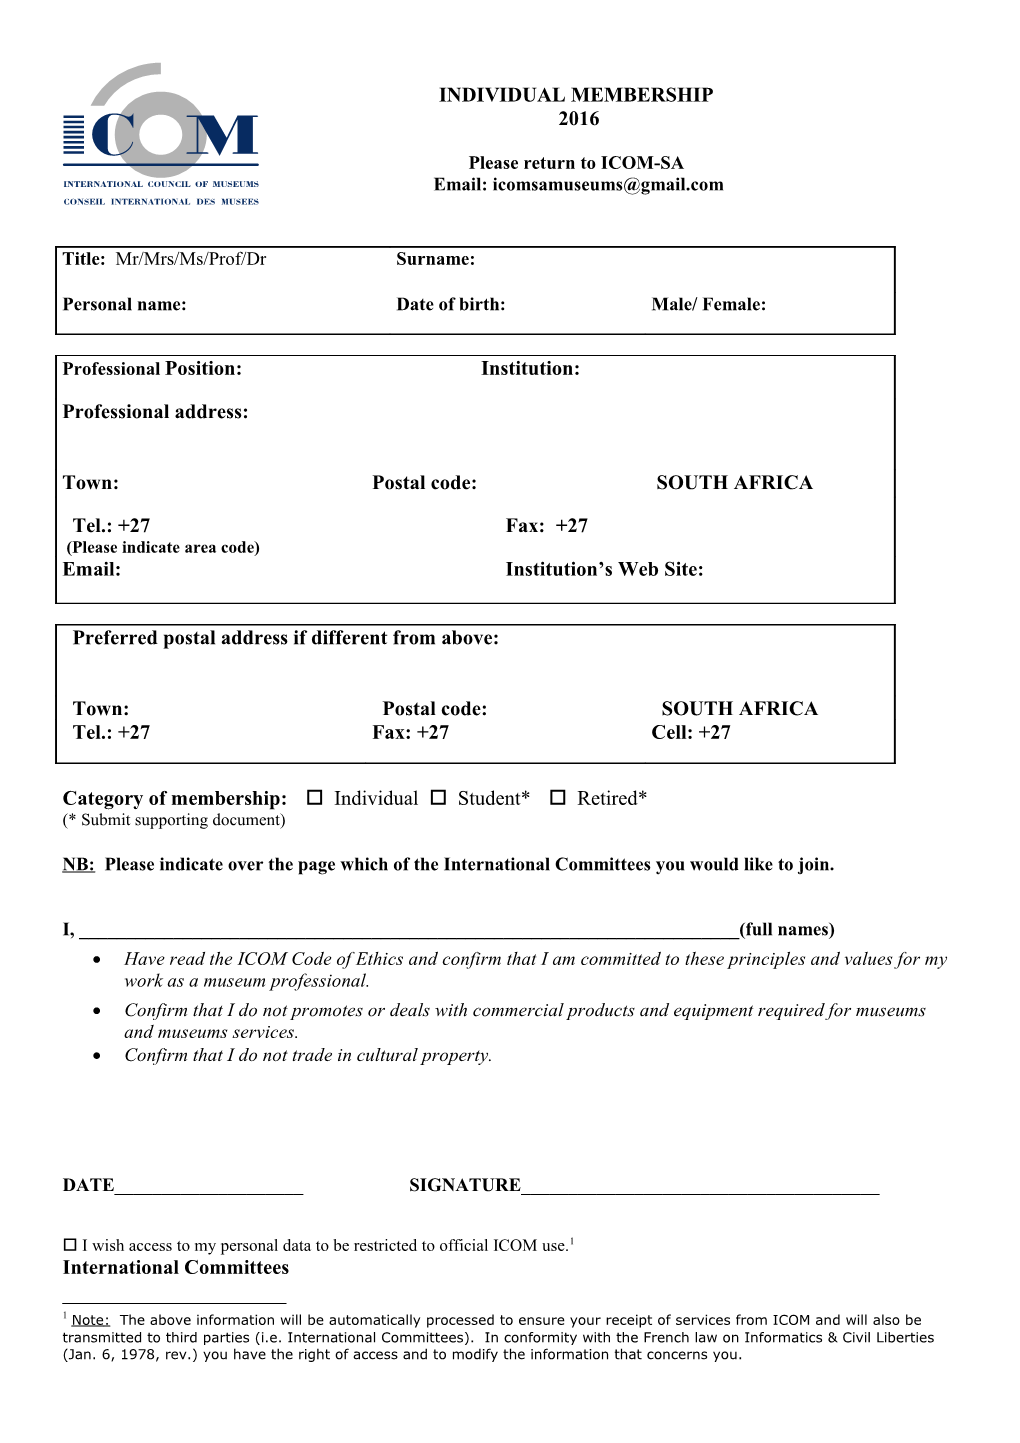 Individual Membership Application Form